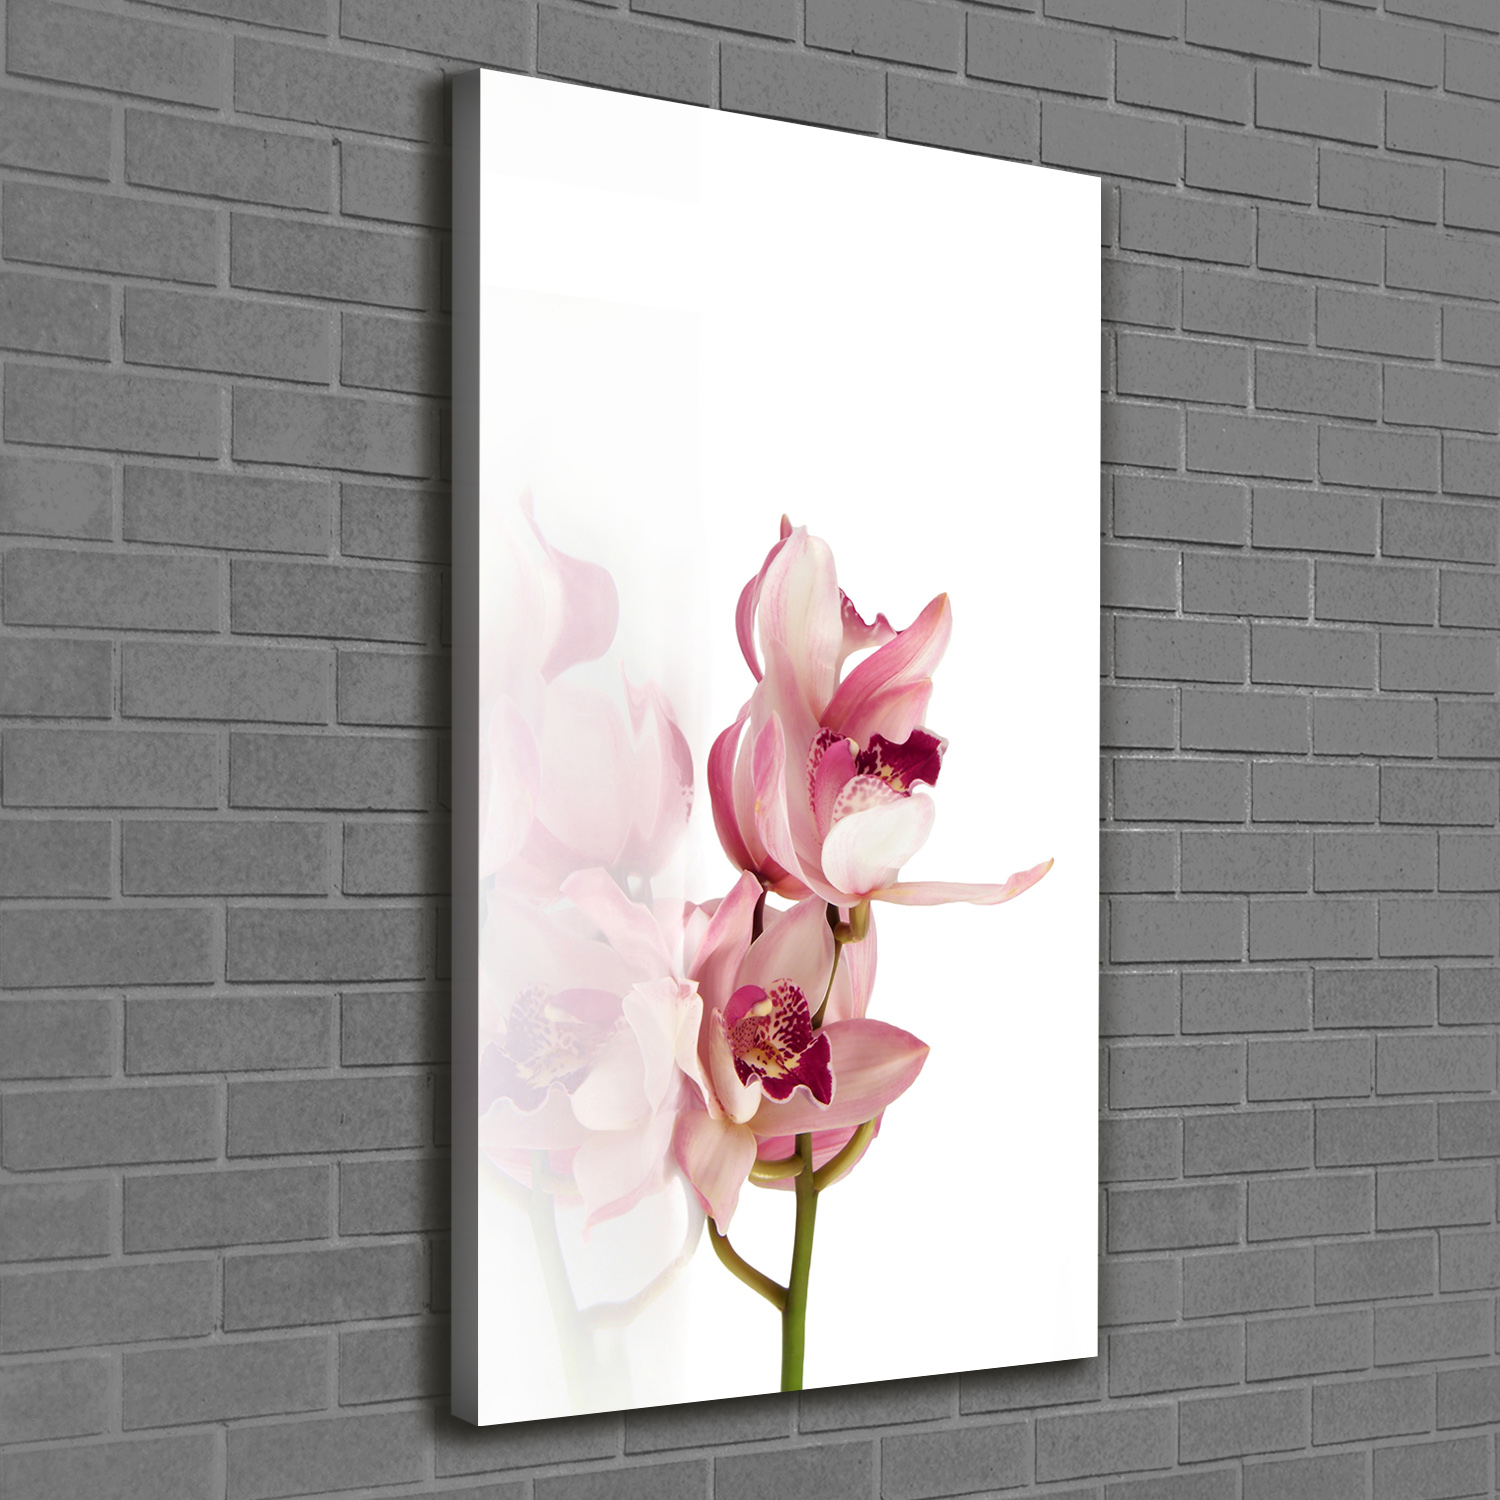 Leinwand-Bild Kunstdruck Hochformat 60x120 Bilder Rosa Orchidee